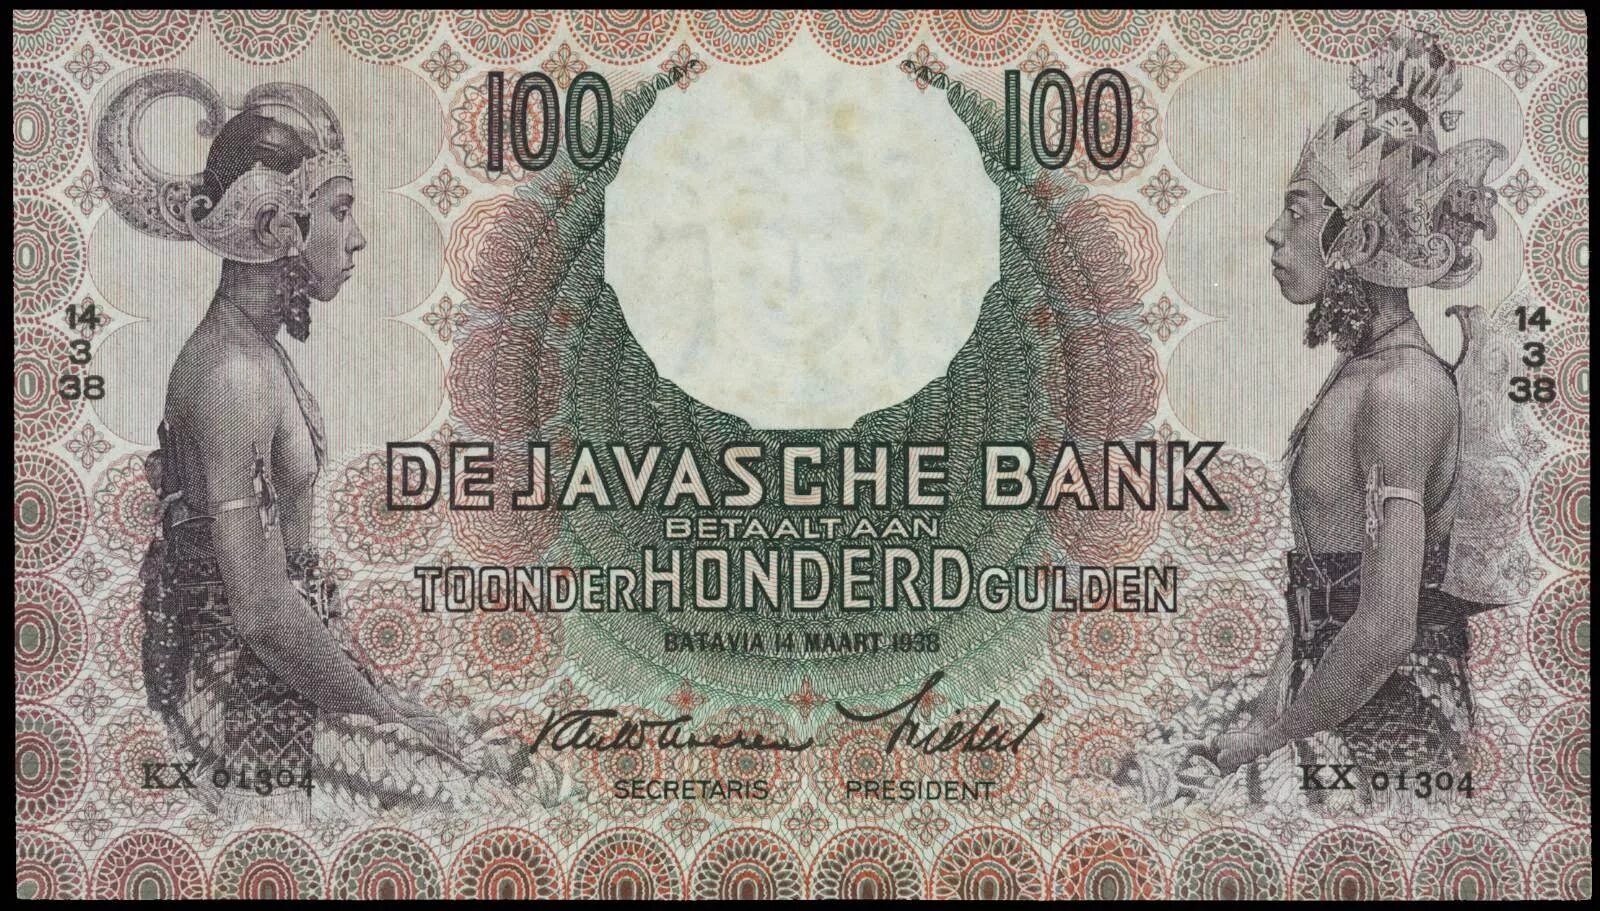 100 инди. Banknote Индия, 100. Голландский гульден 100. Индия 1939 банкнота. Монеты индонезийских гульденов ОСТ Индии.